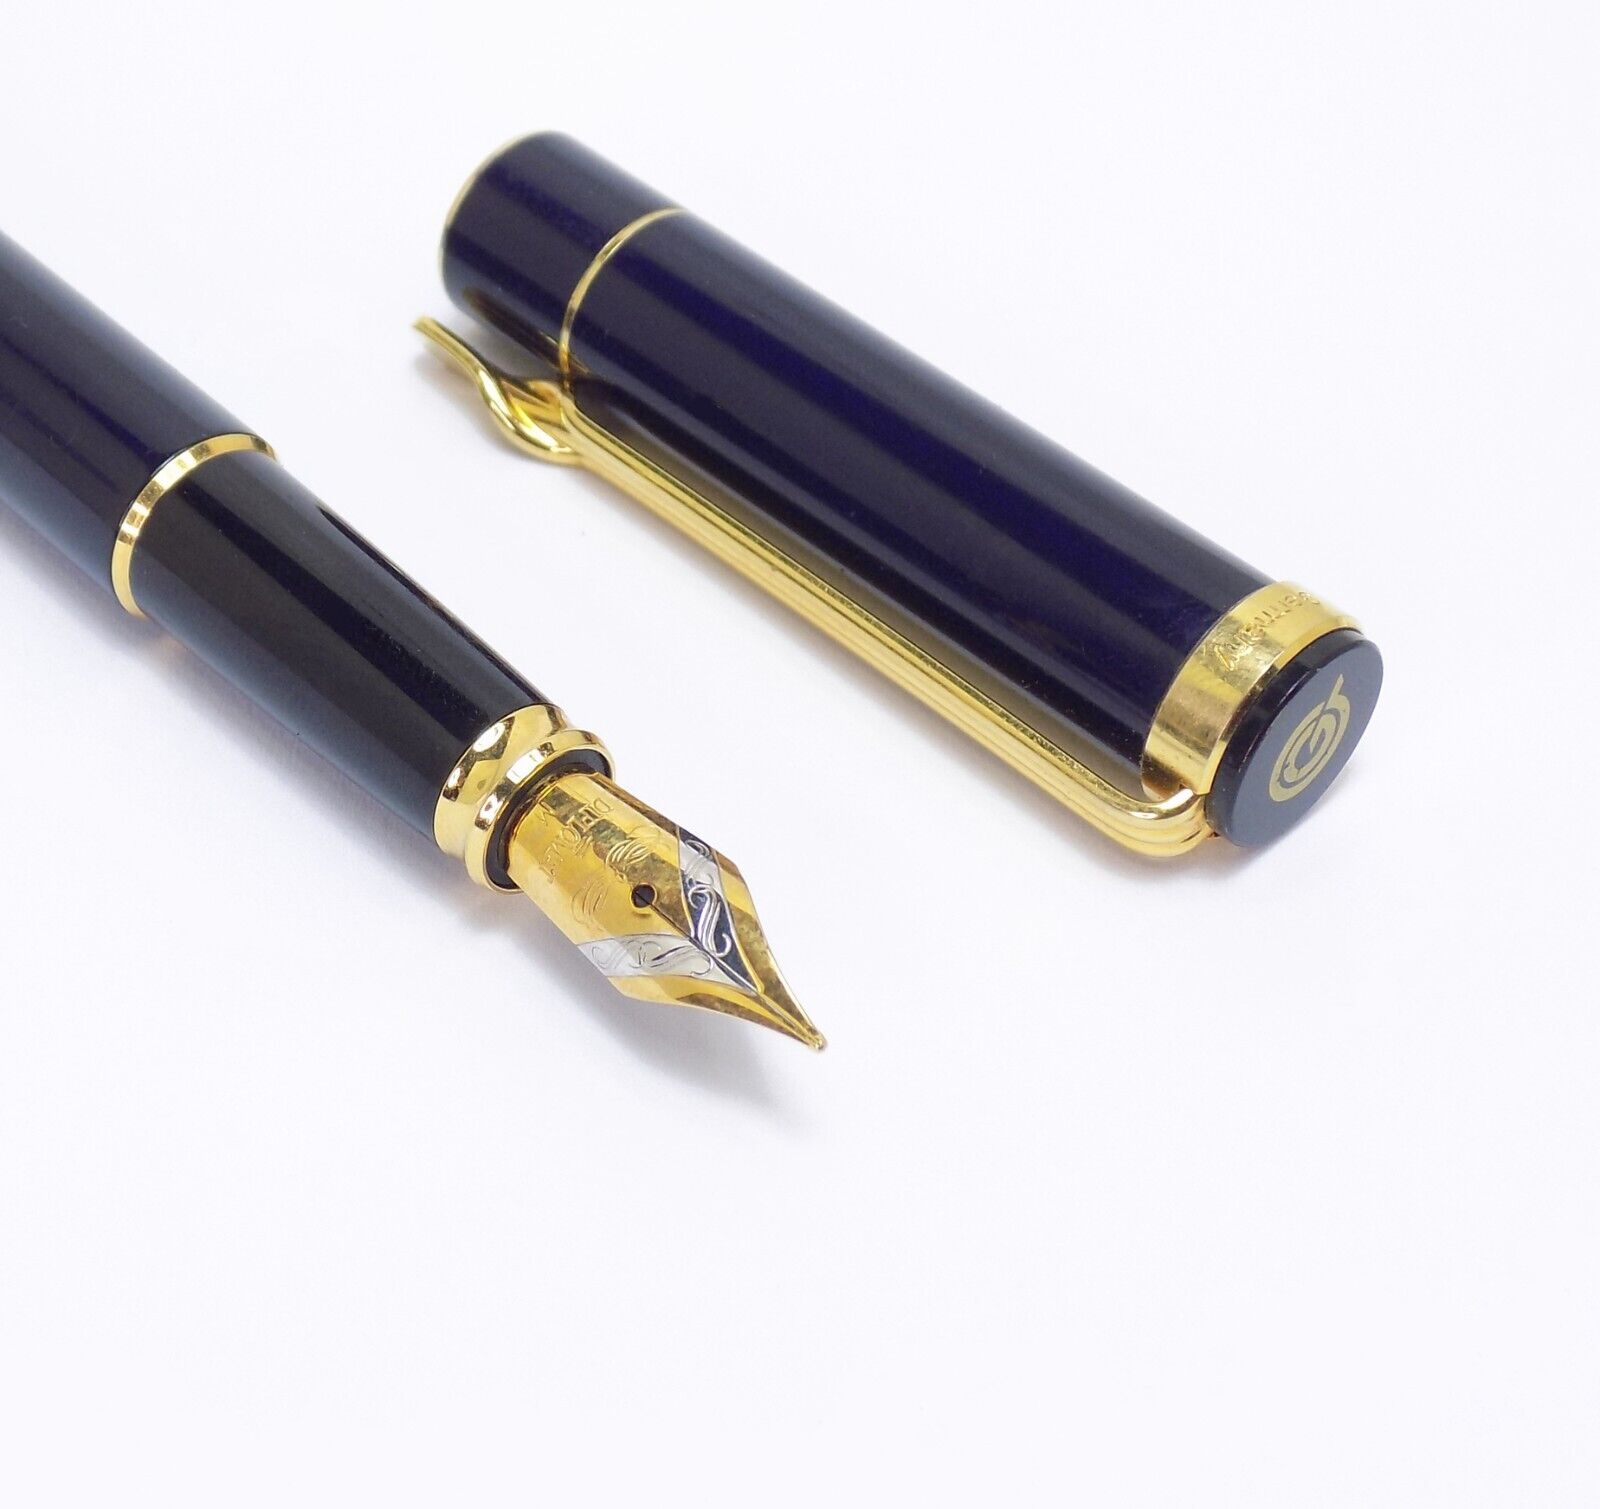 Vintage Diplomat Dark Blue Fountain Pen - Uninked